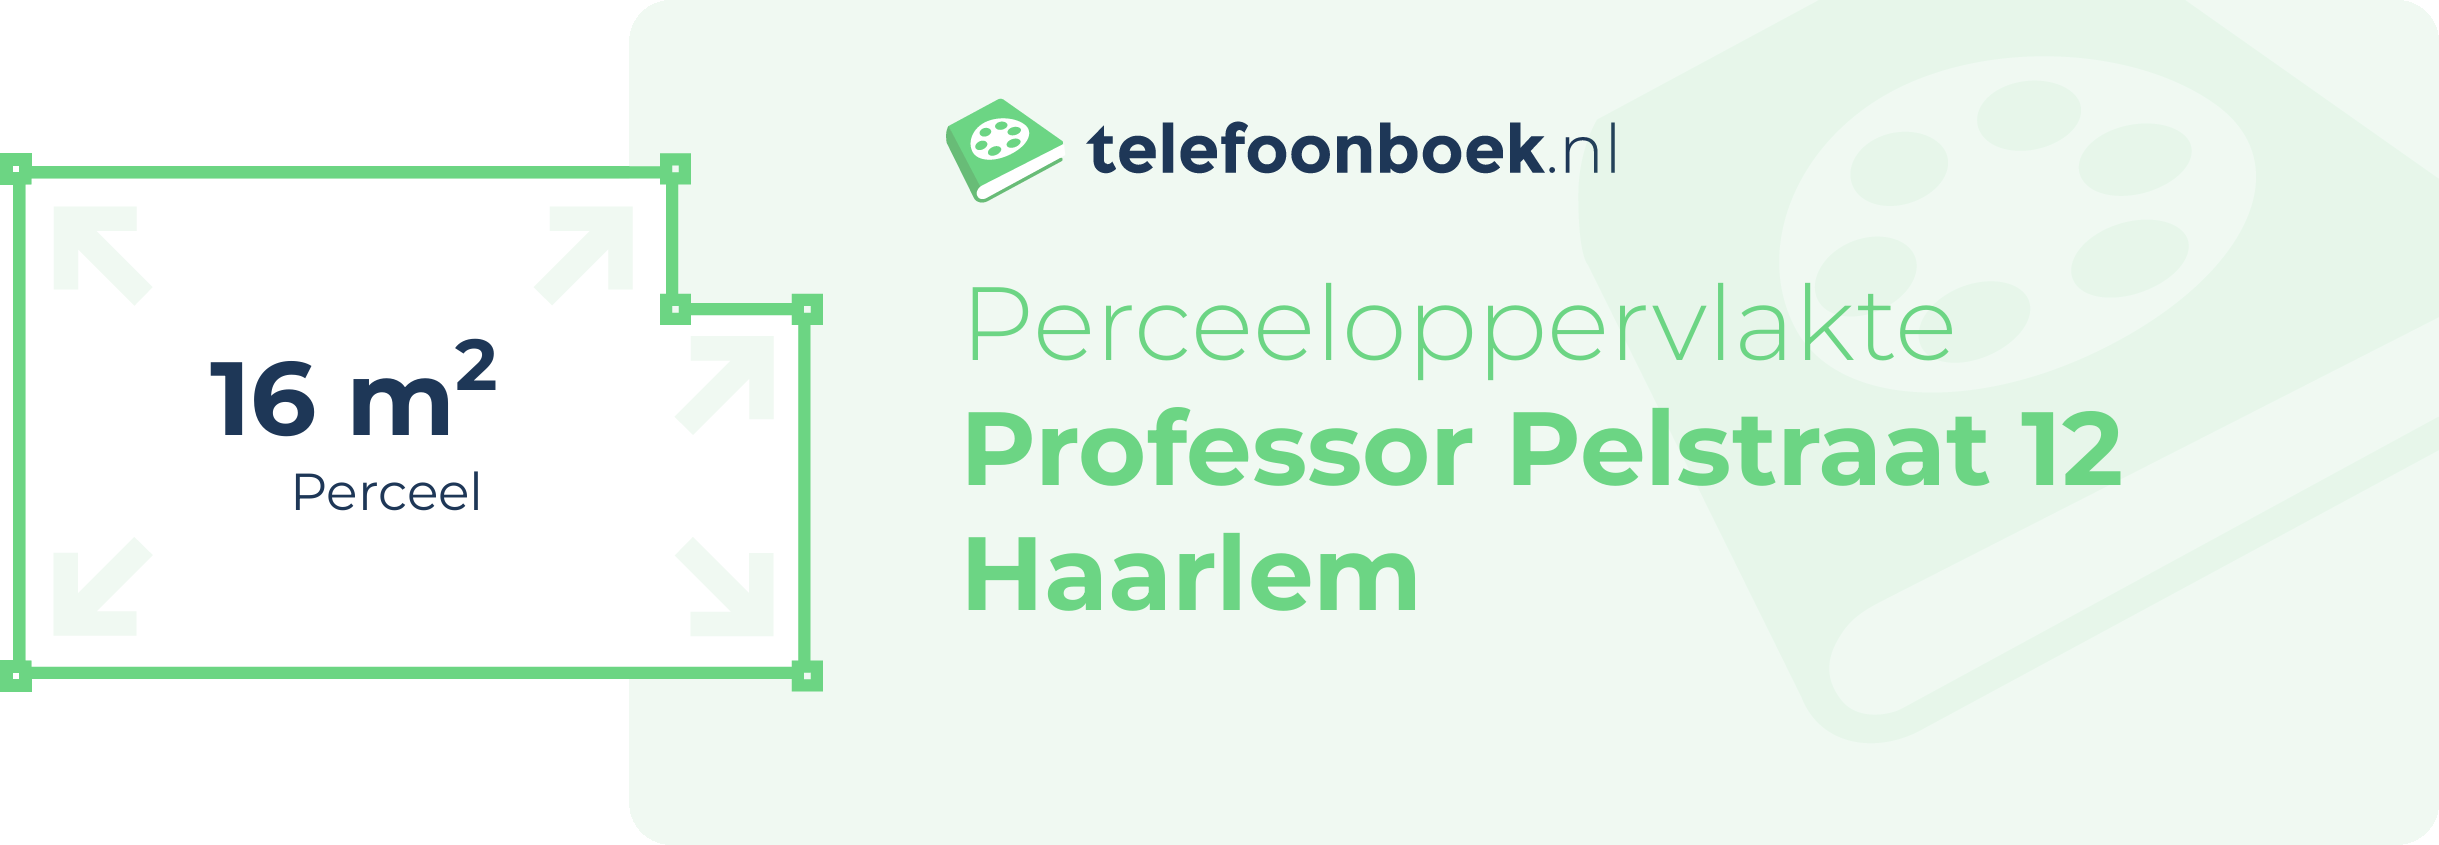 Perceeloppervlakte Professor Pelstraat 12 Haarlem